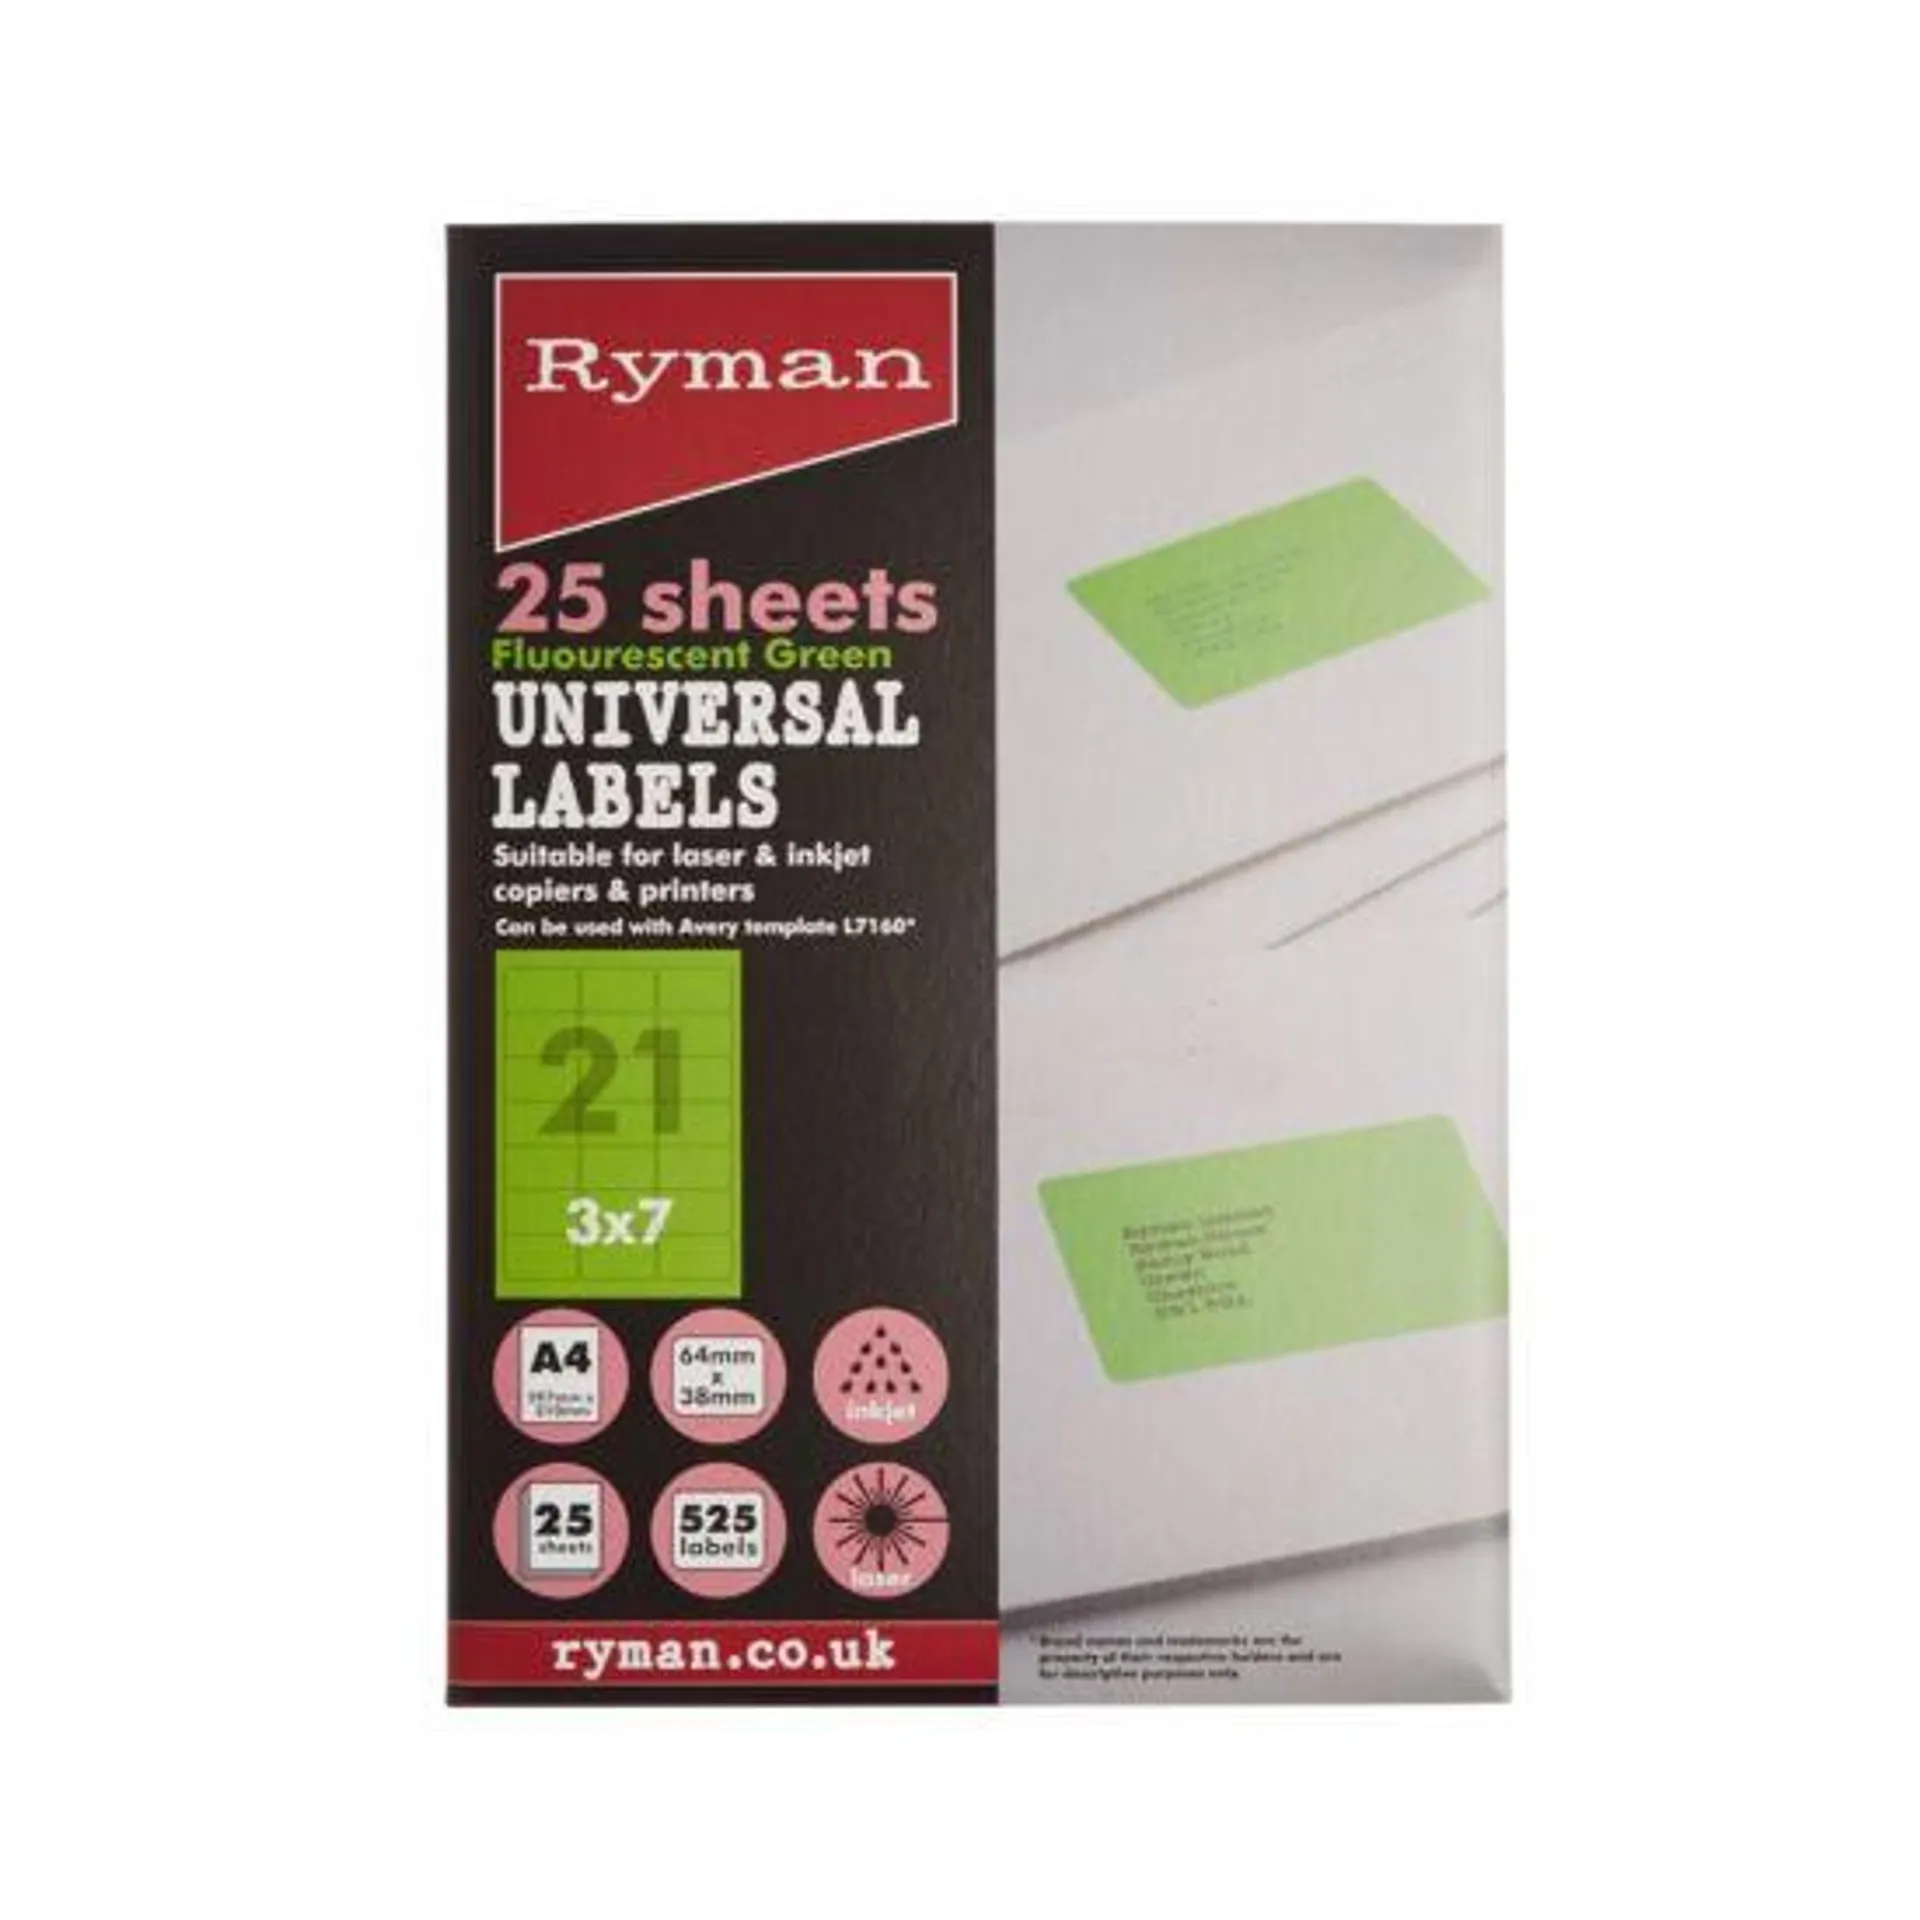 Ryman Universal Labels 21 Per Sheet Pack of 25 Sheets